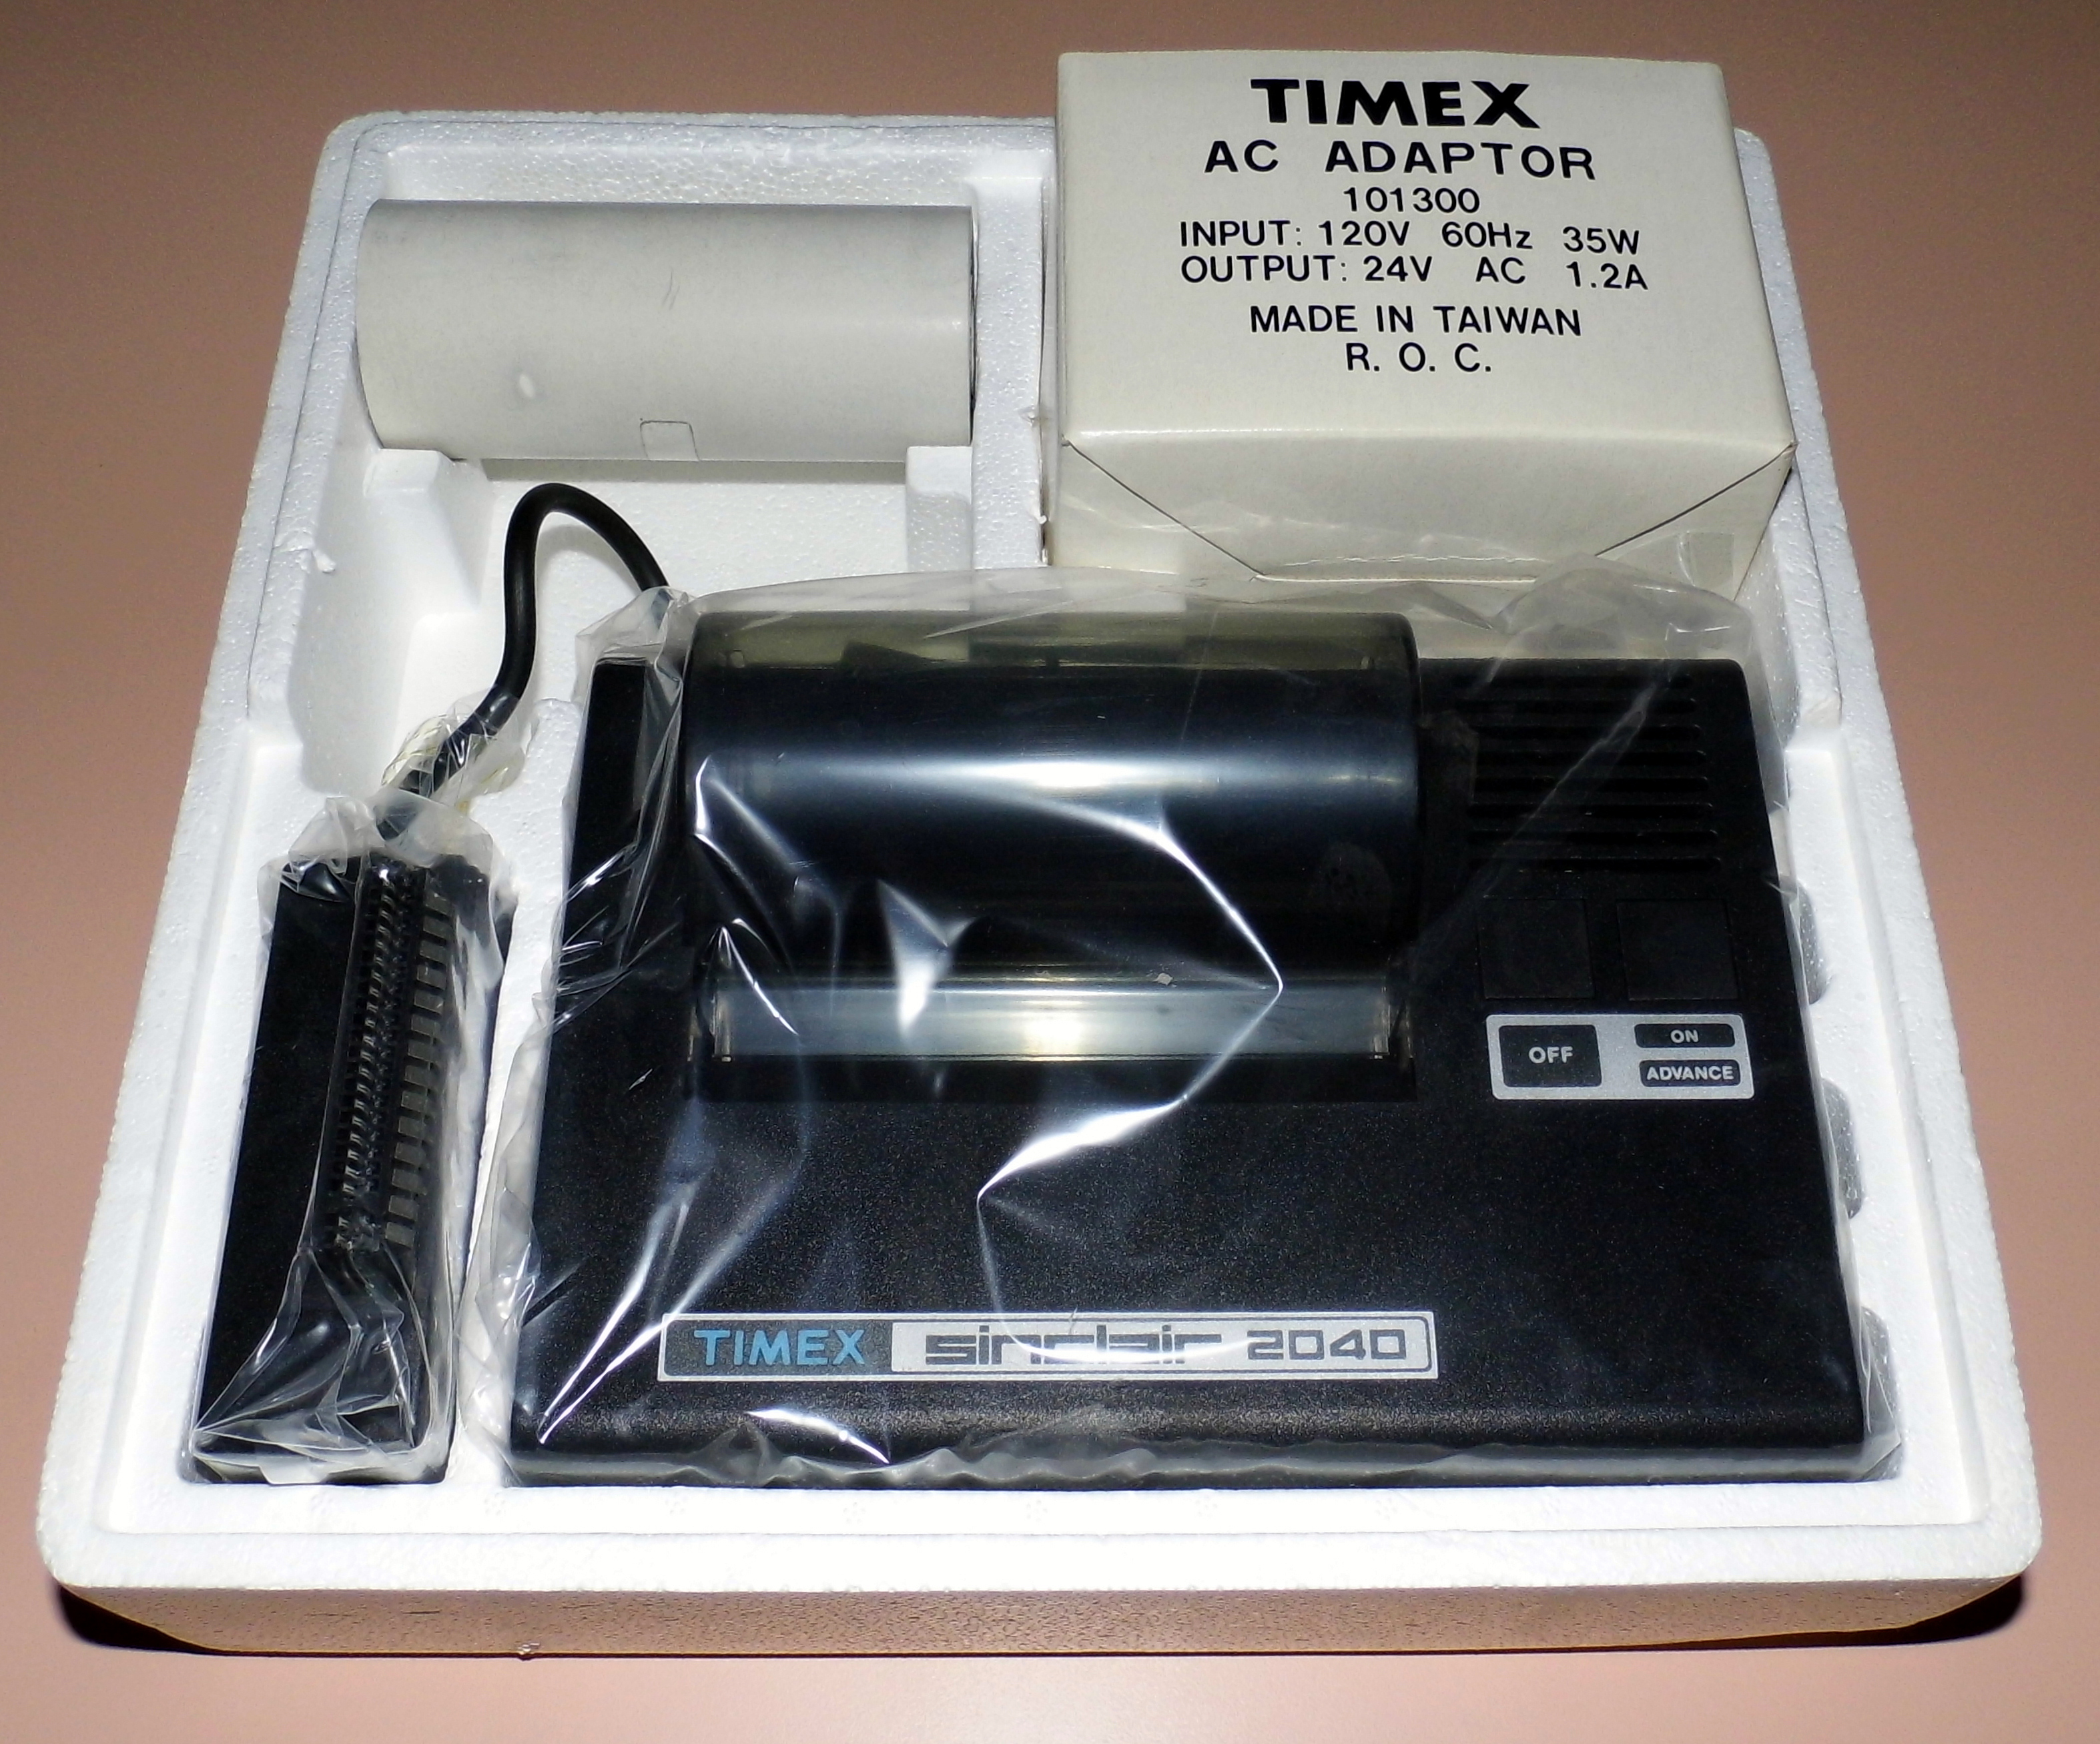 Timex Sinclair 2040 Thermal Printer.jpg